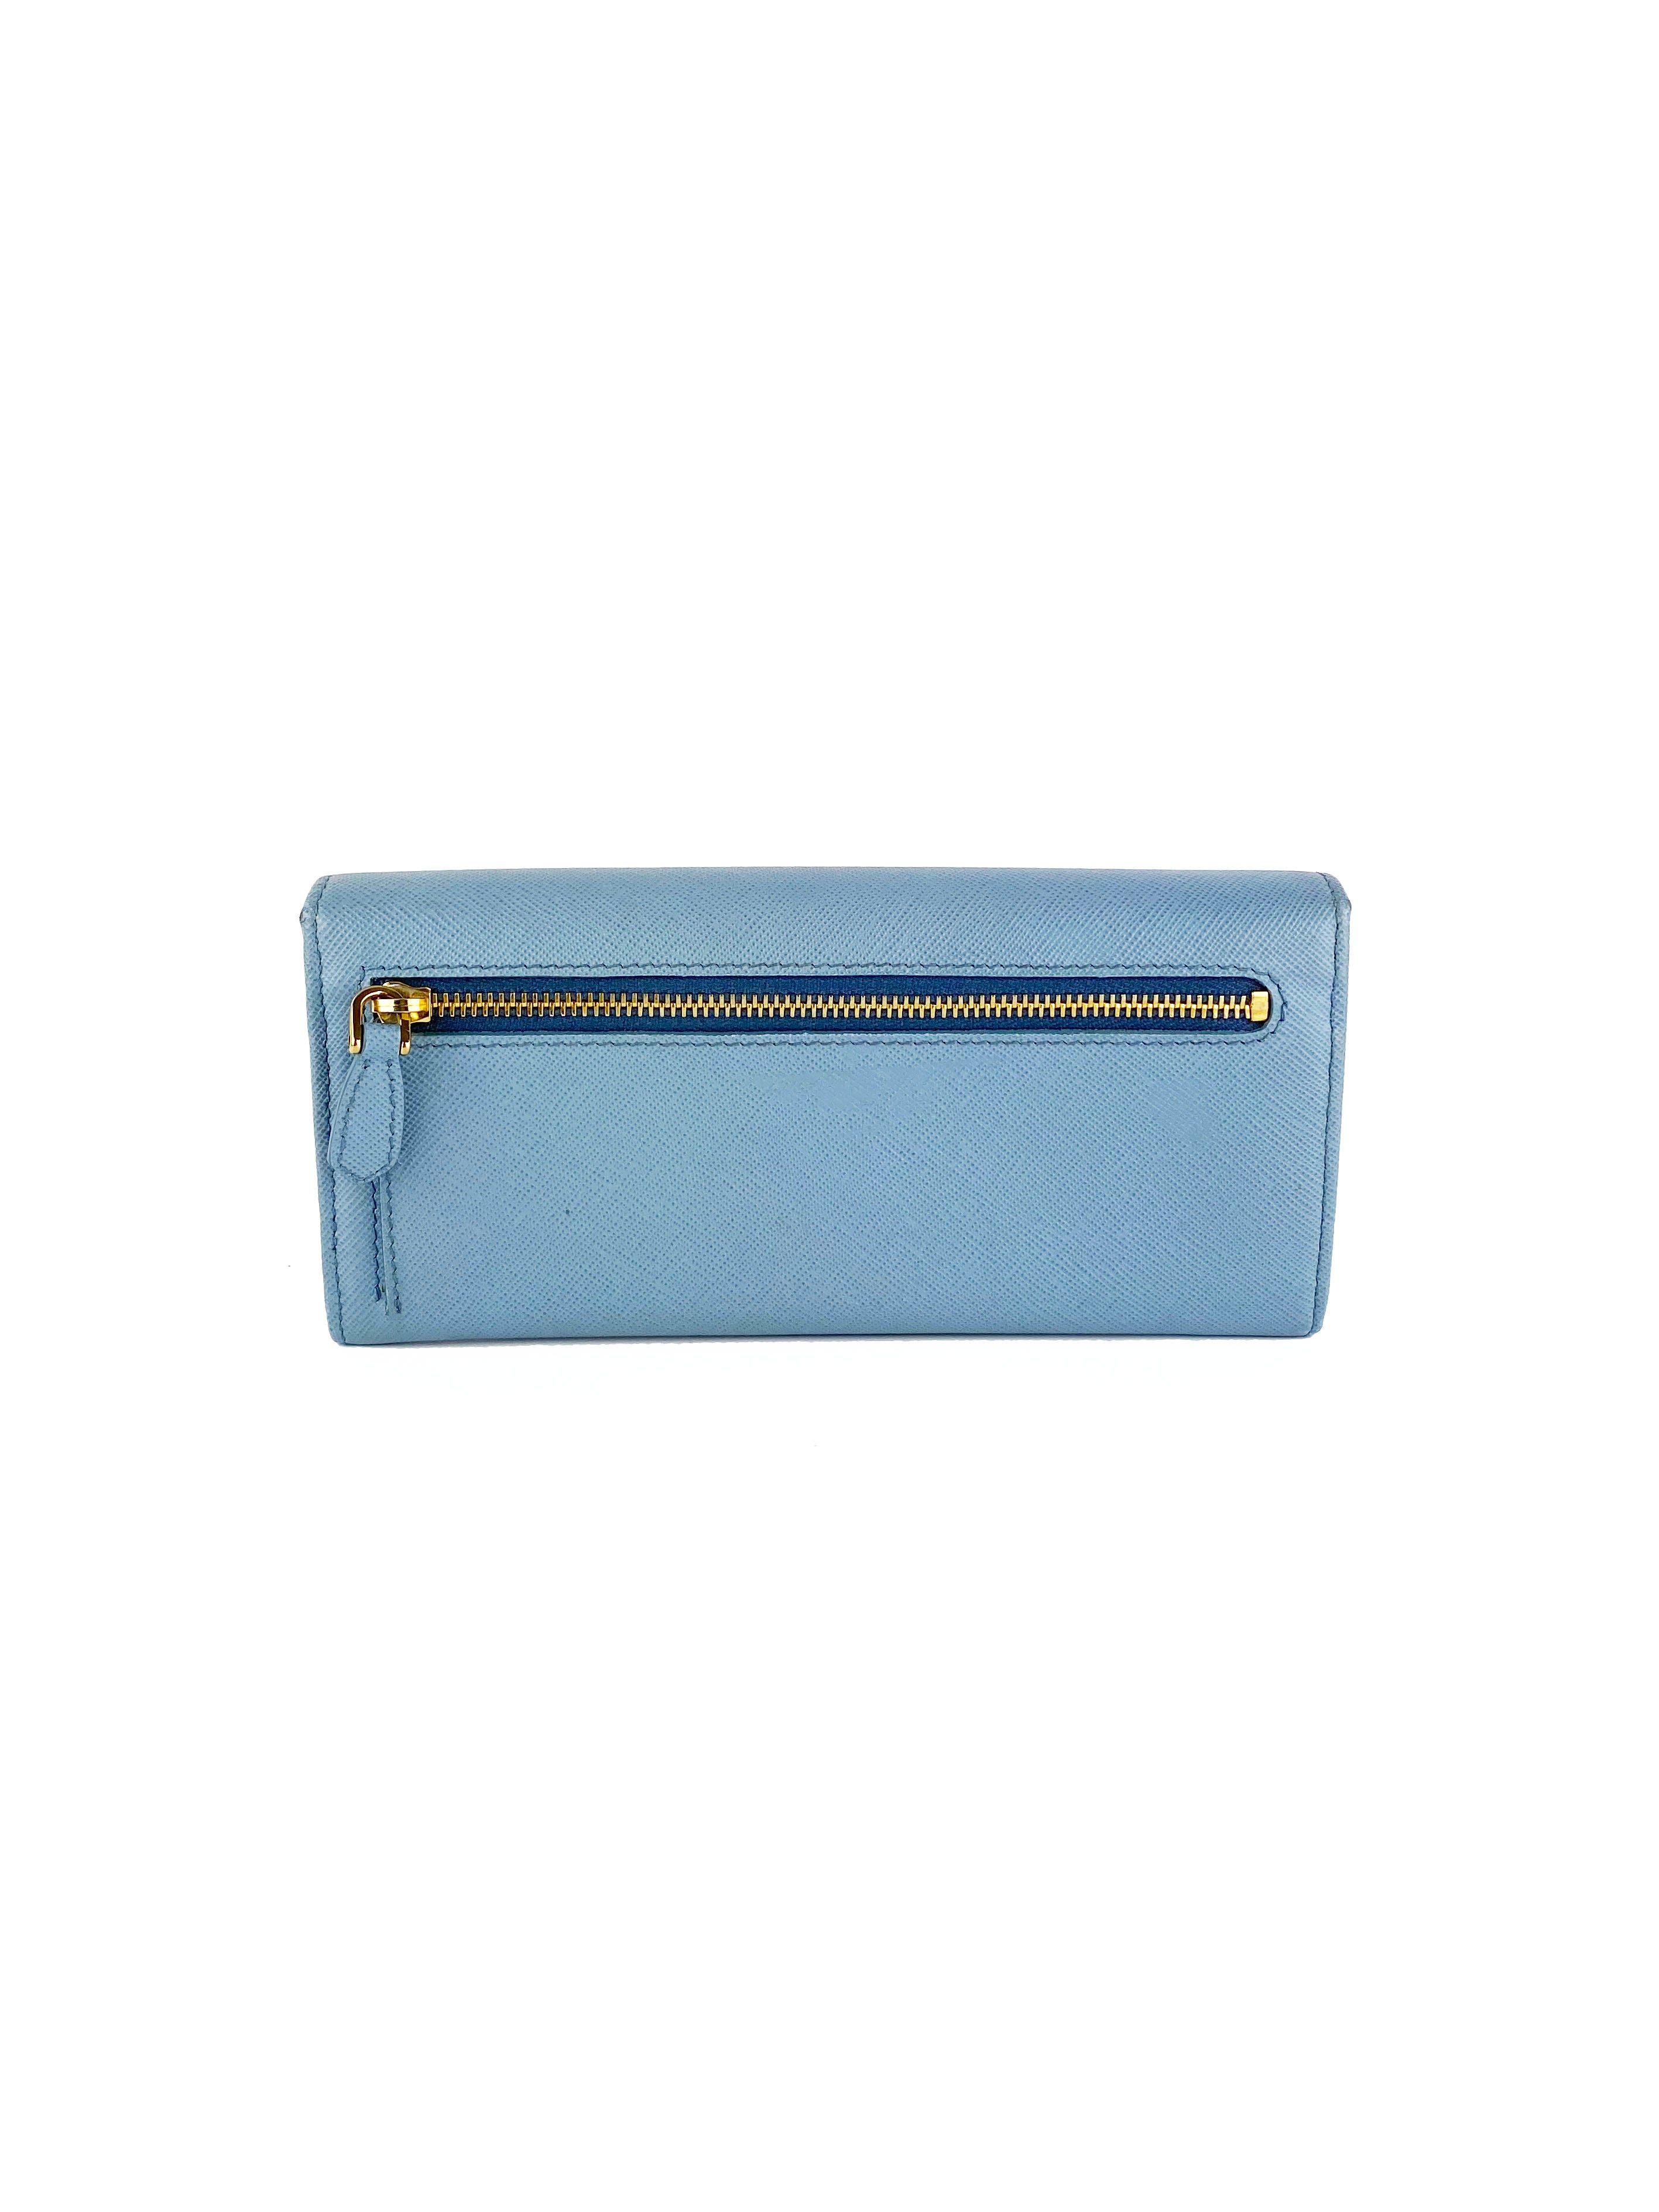 prada-baby-blue-saffiano-wallet-6.jpg